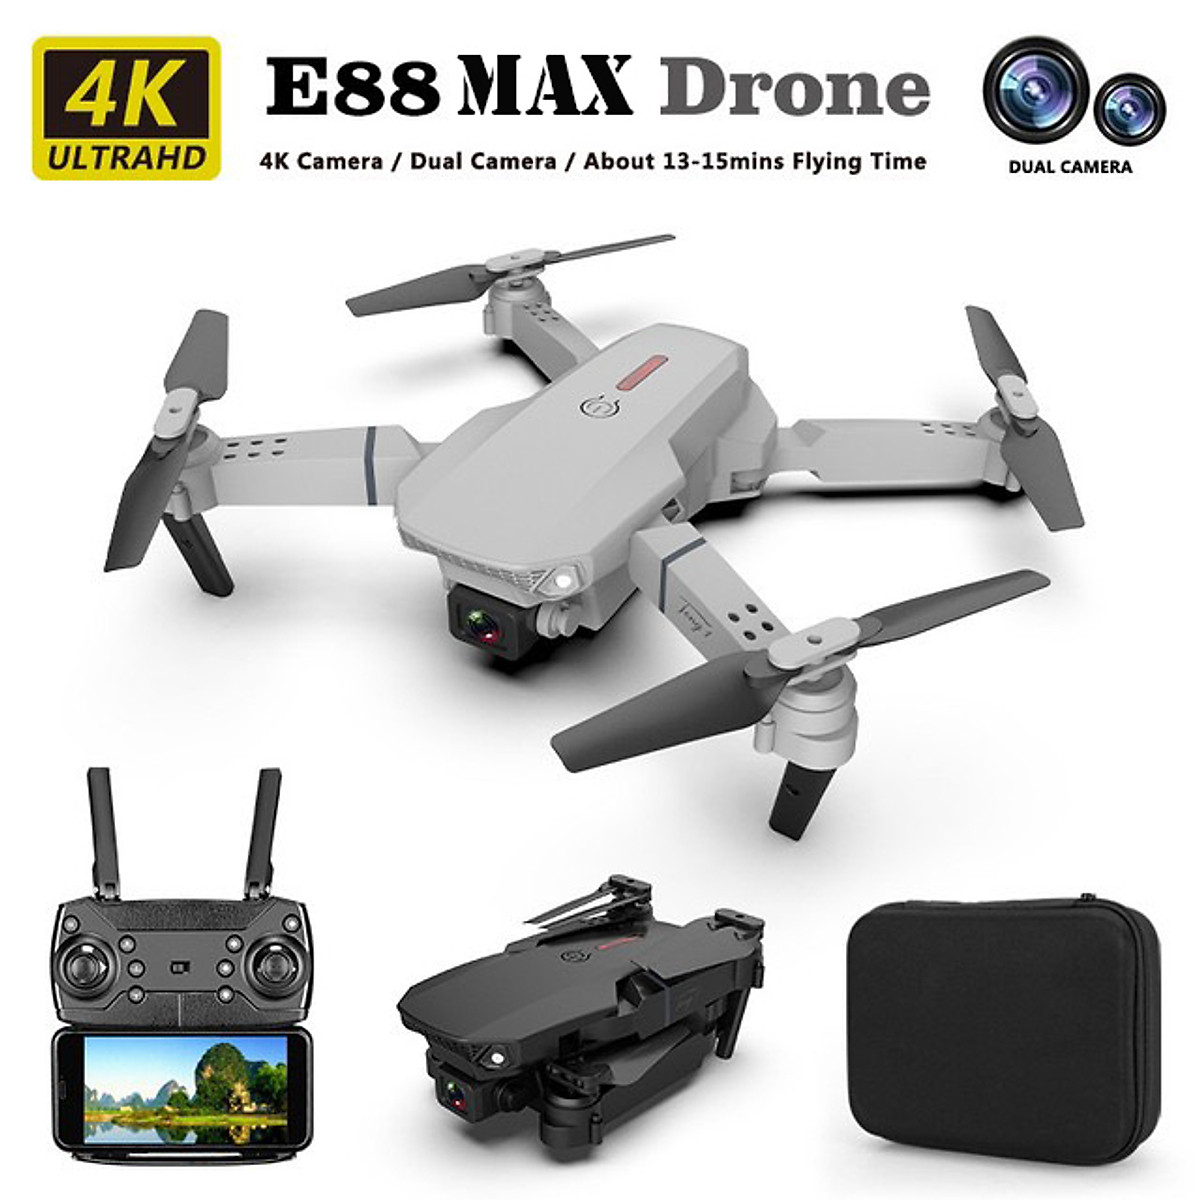 FLYCAM - drone mini, flycam e88 pro có camera, máy bay quay phim chụp ảnh